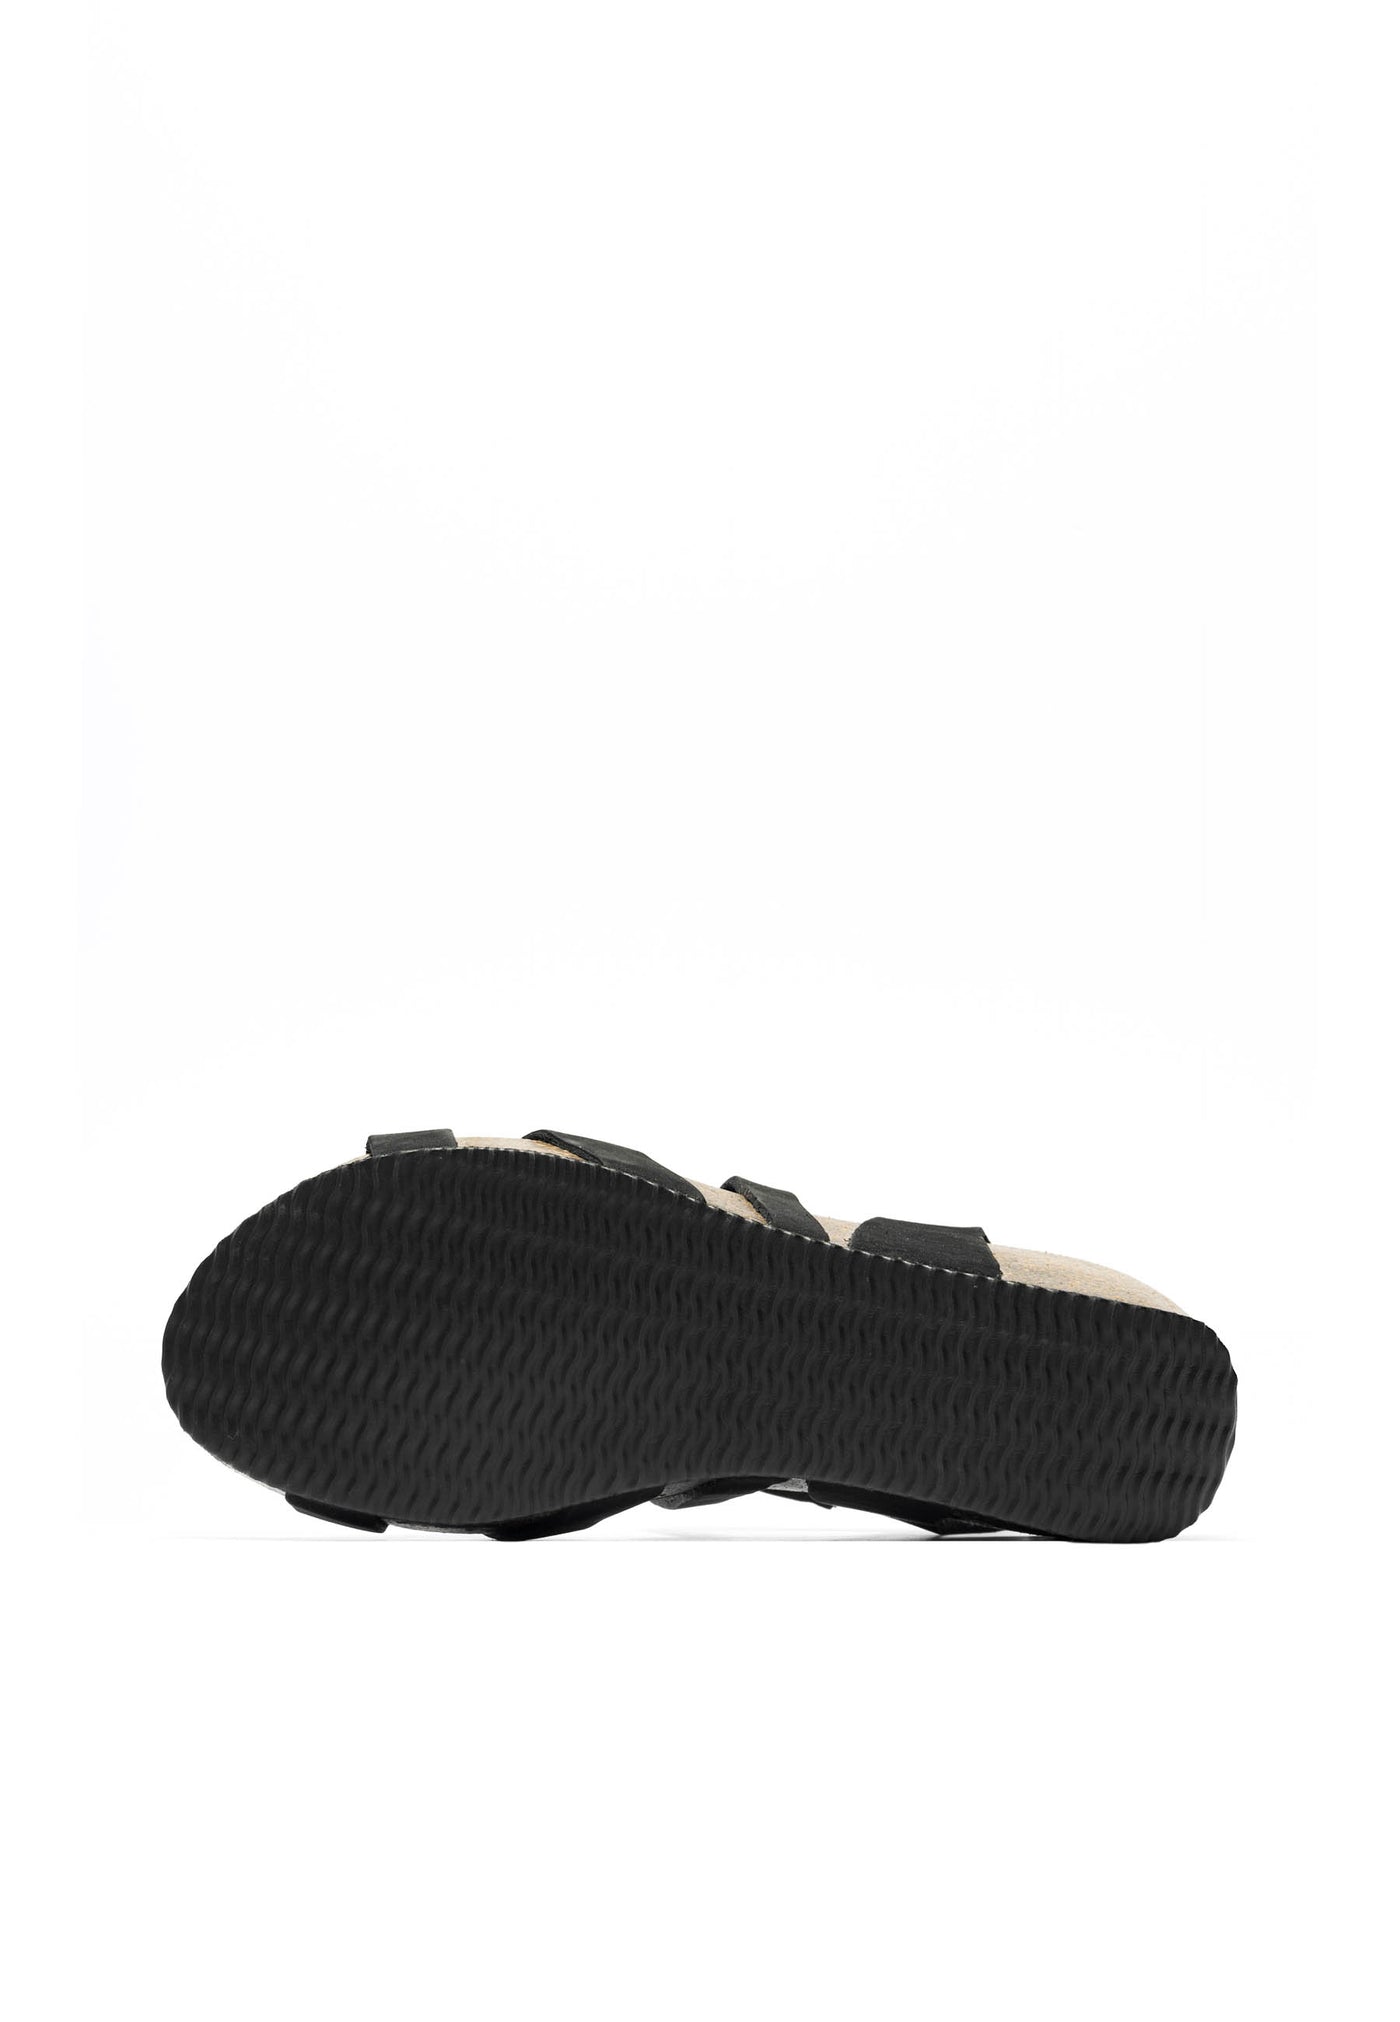 CASHOTT CASANNI Sandal Leather Ankel strap Black